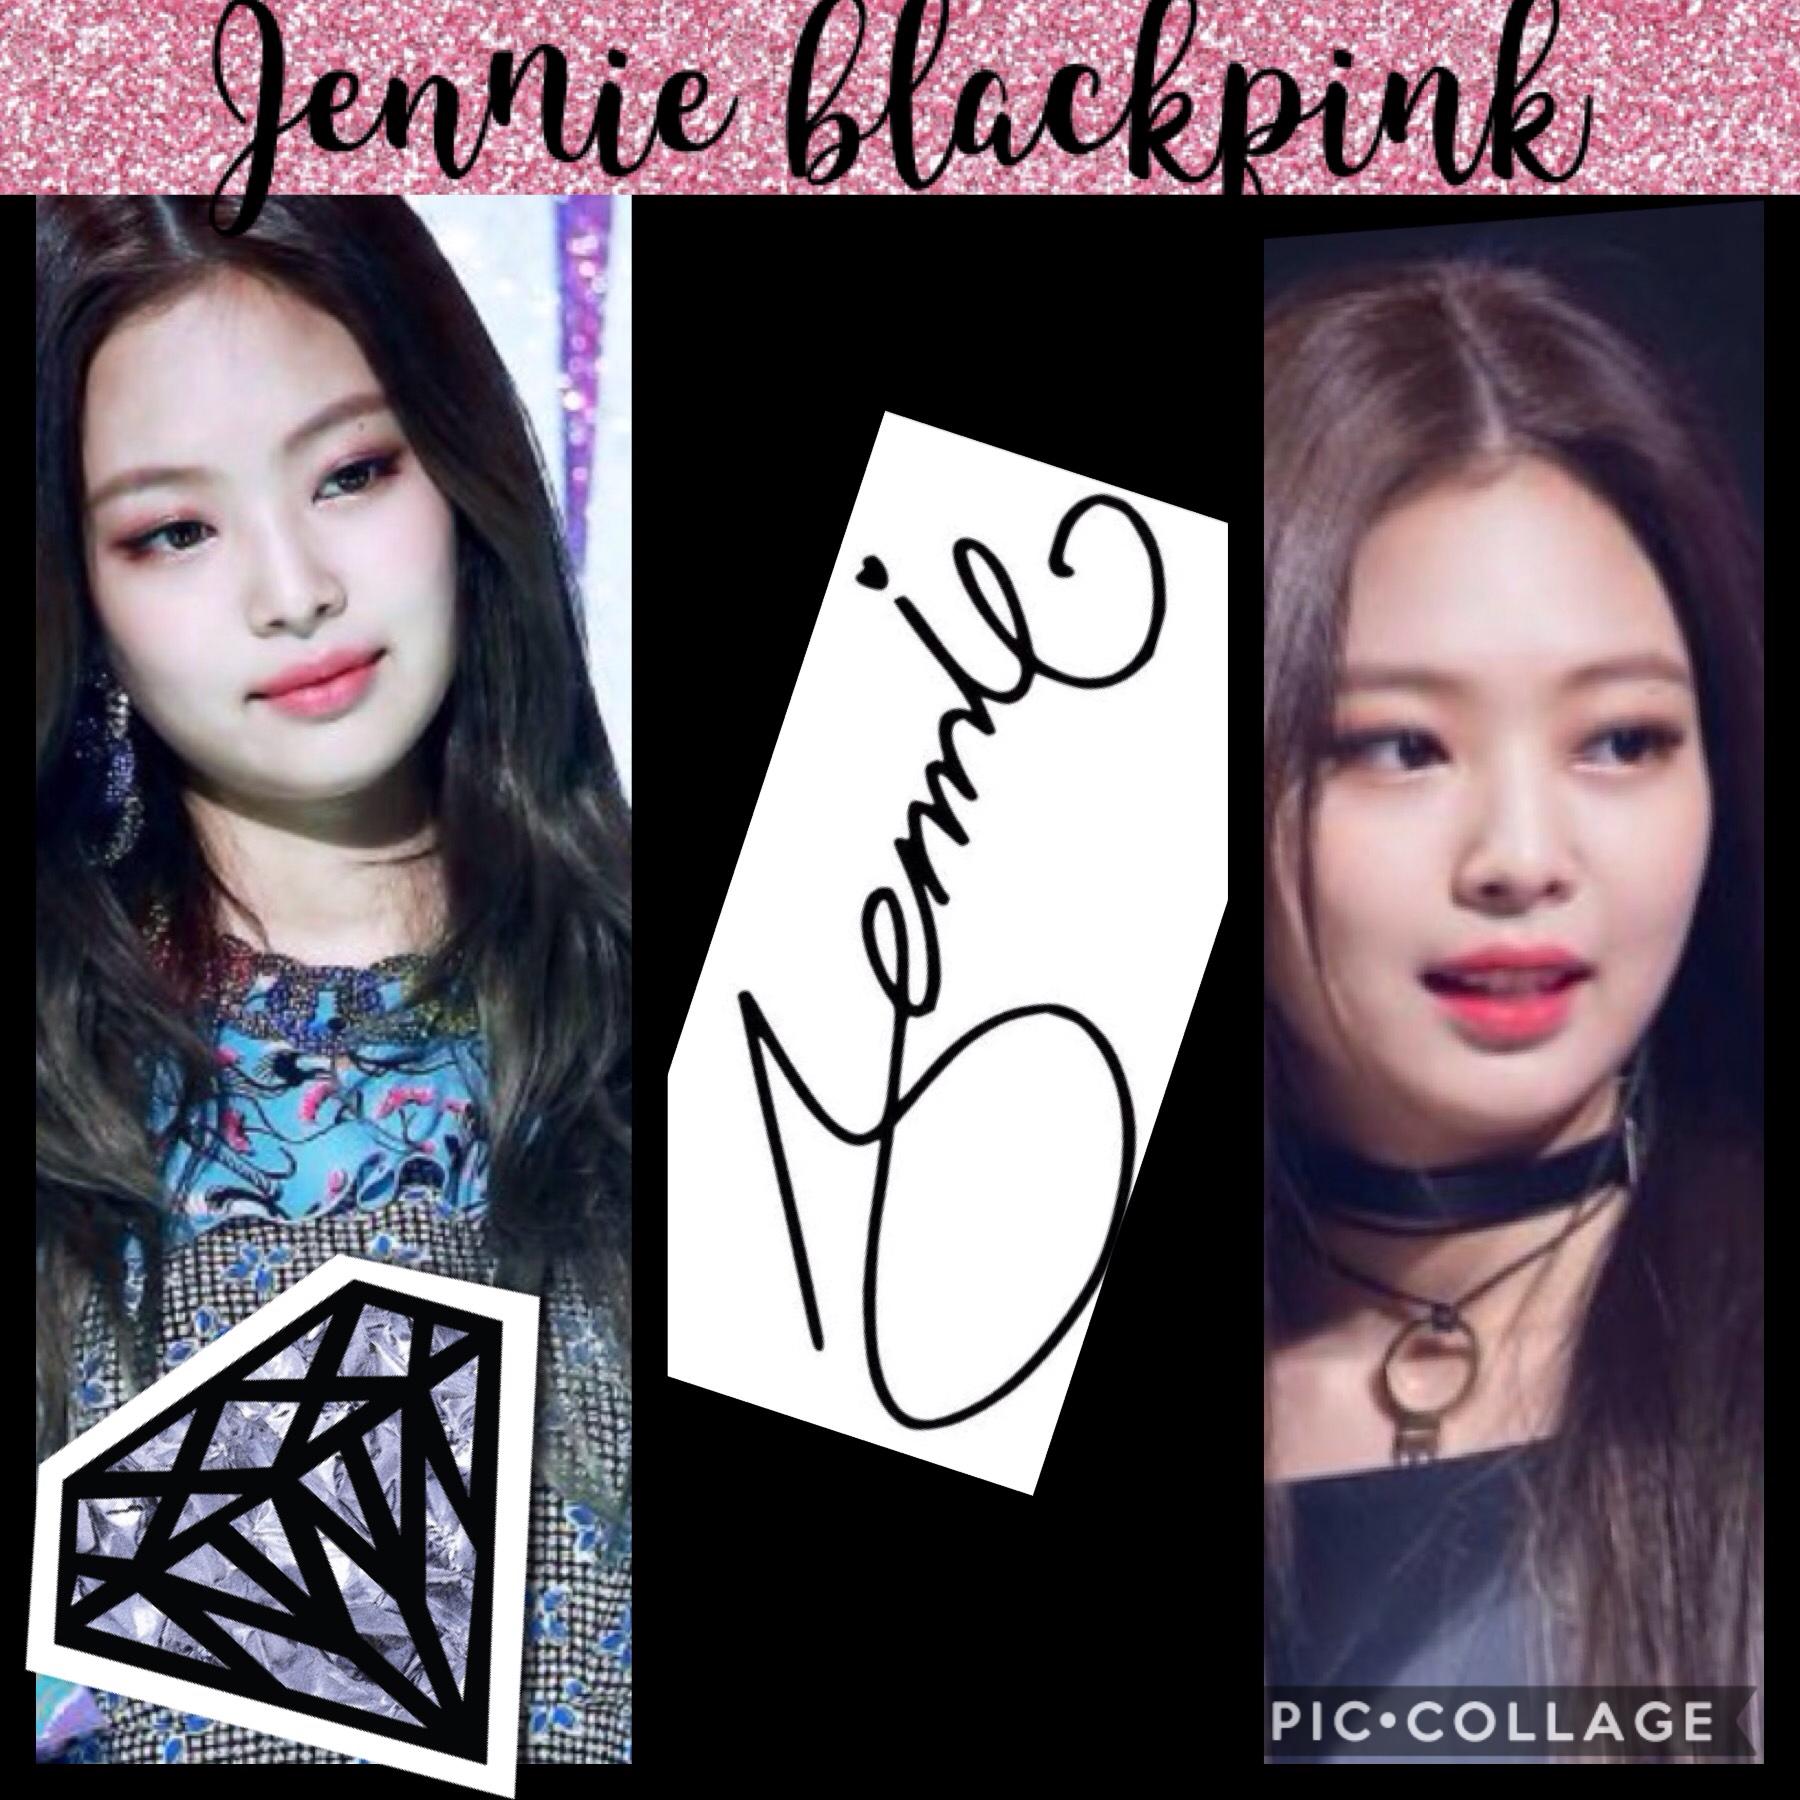 Jennie omg #blackpink